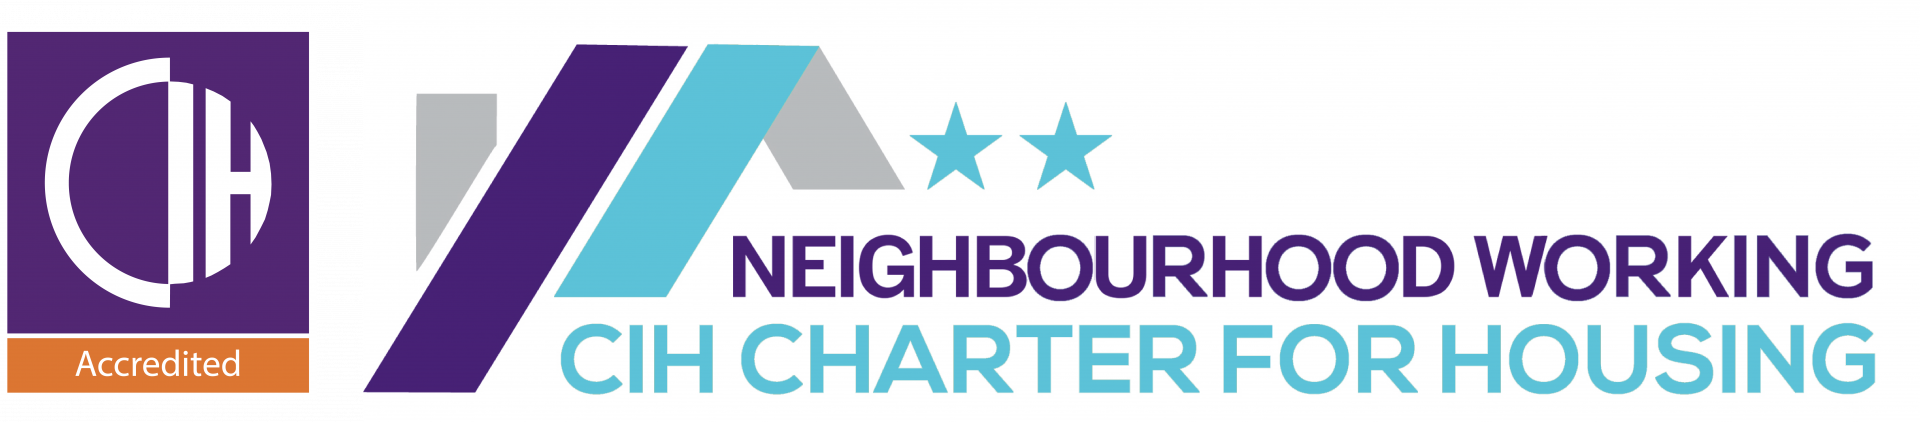 Neighbourhood Working: CIH Charter for Housing – North Wales Housing